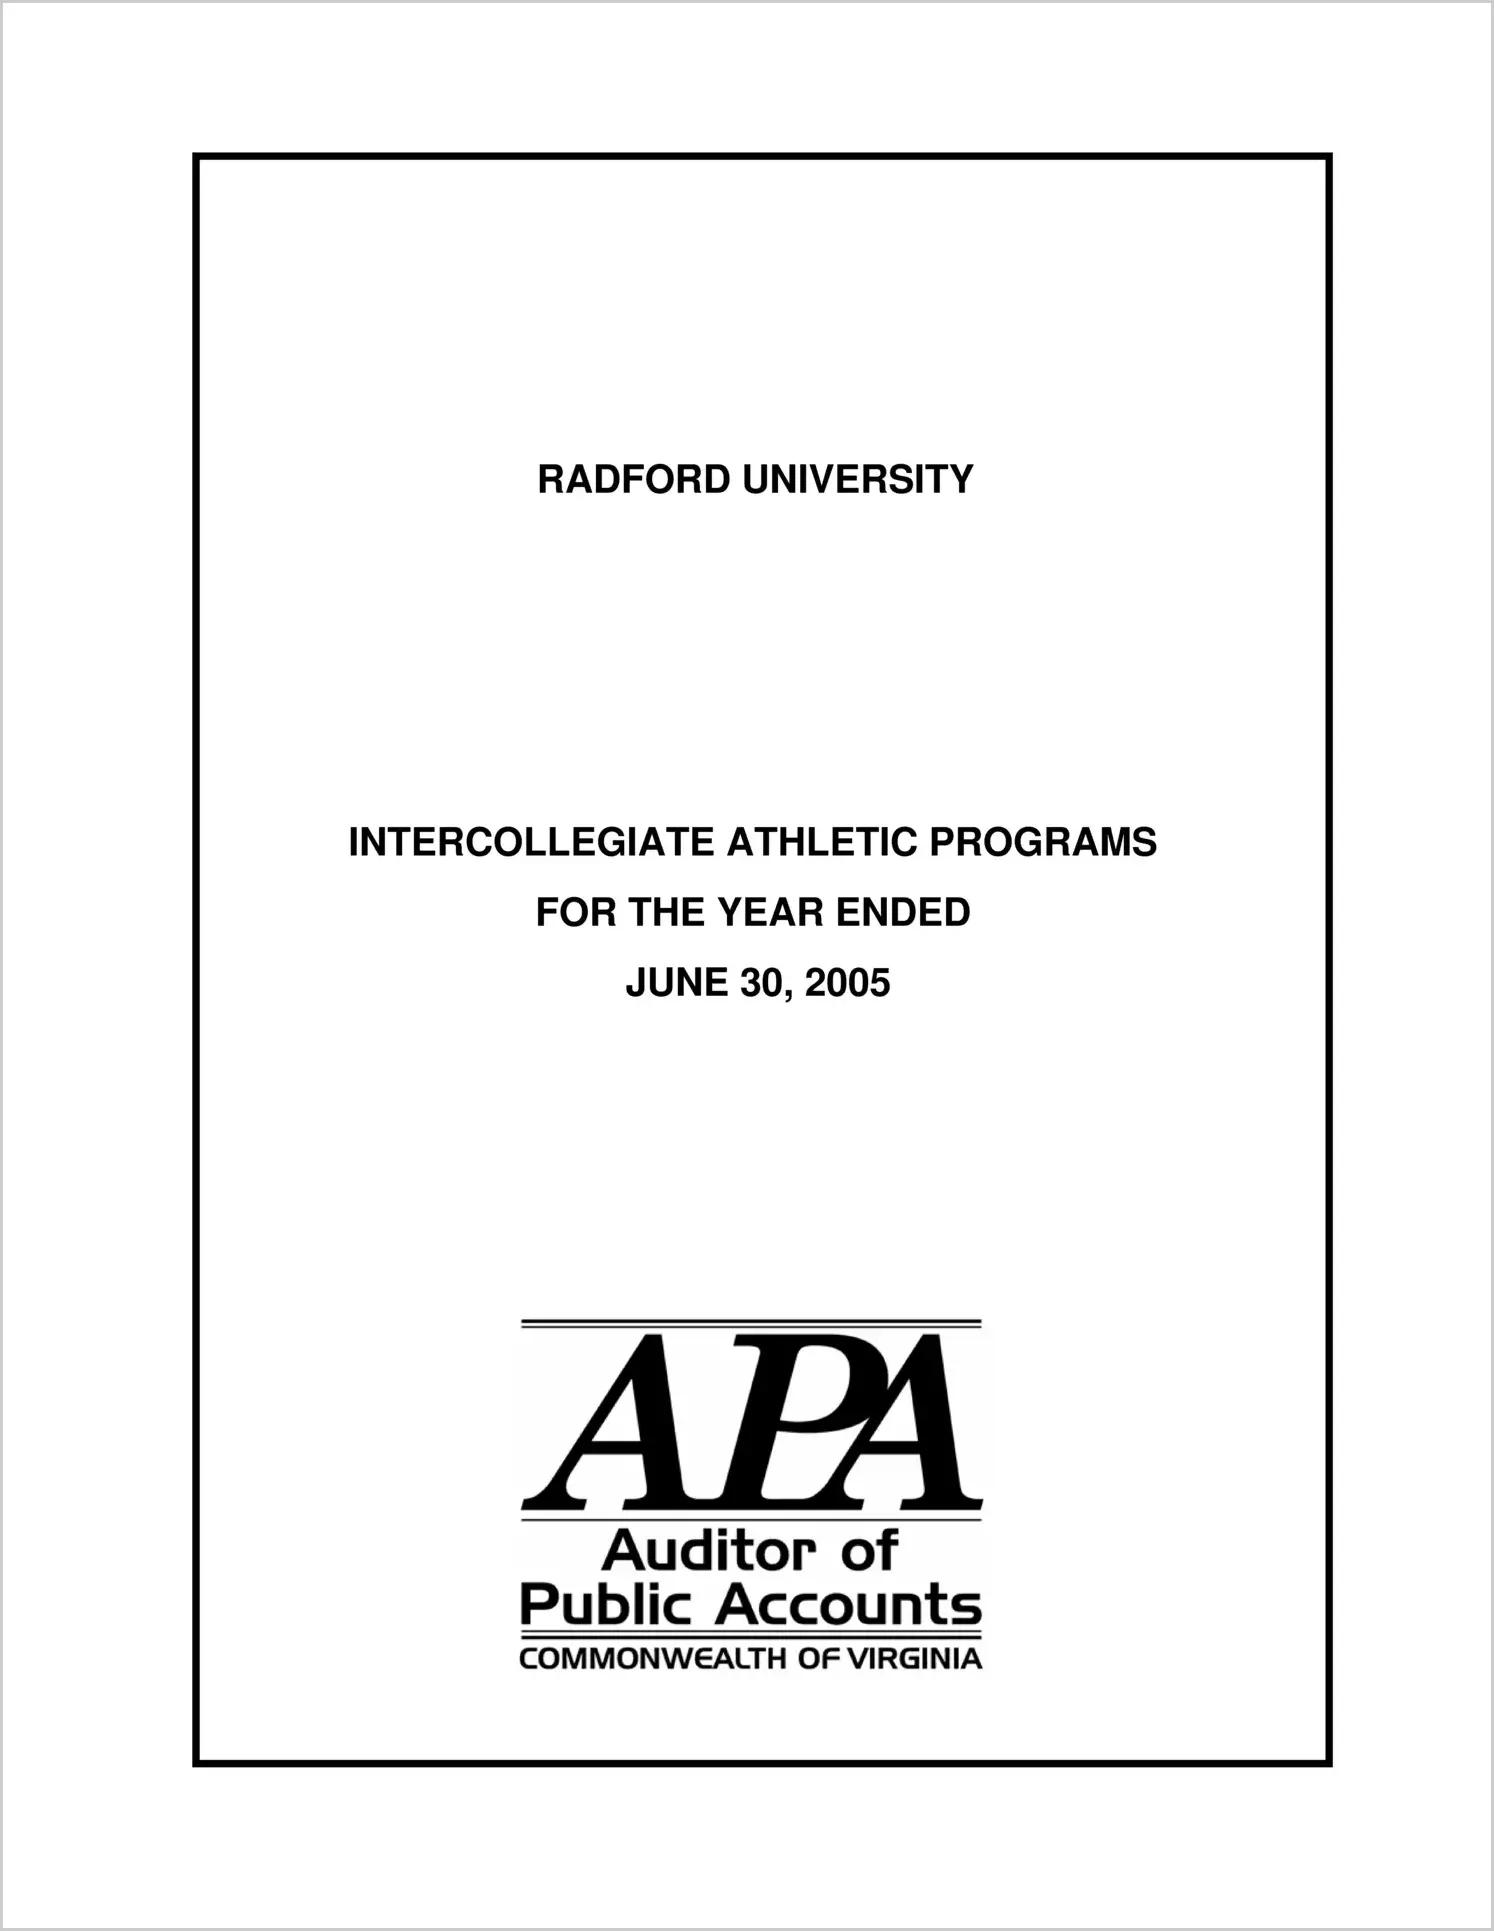 Radford University Intercollegiate Athletic Programs for the year ended June 30, 2005